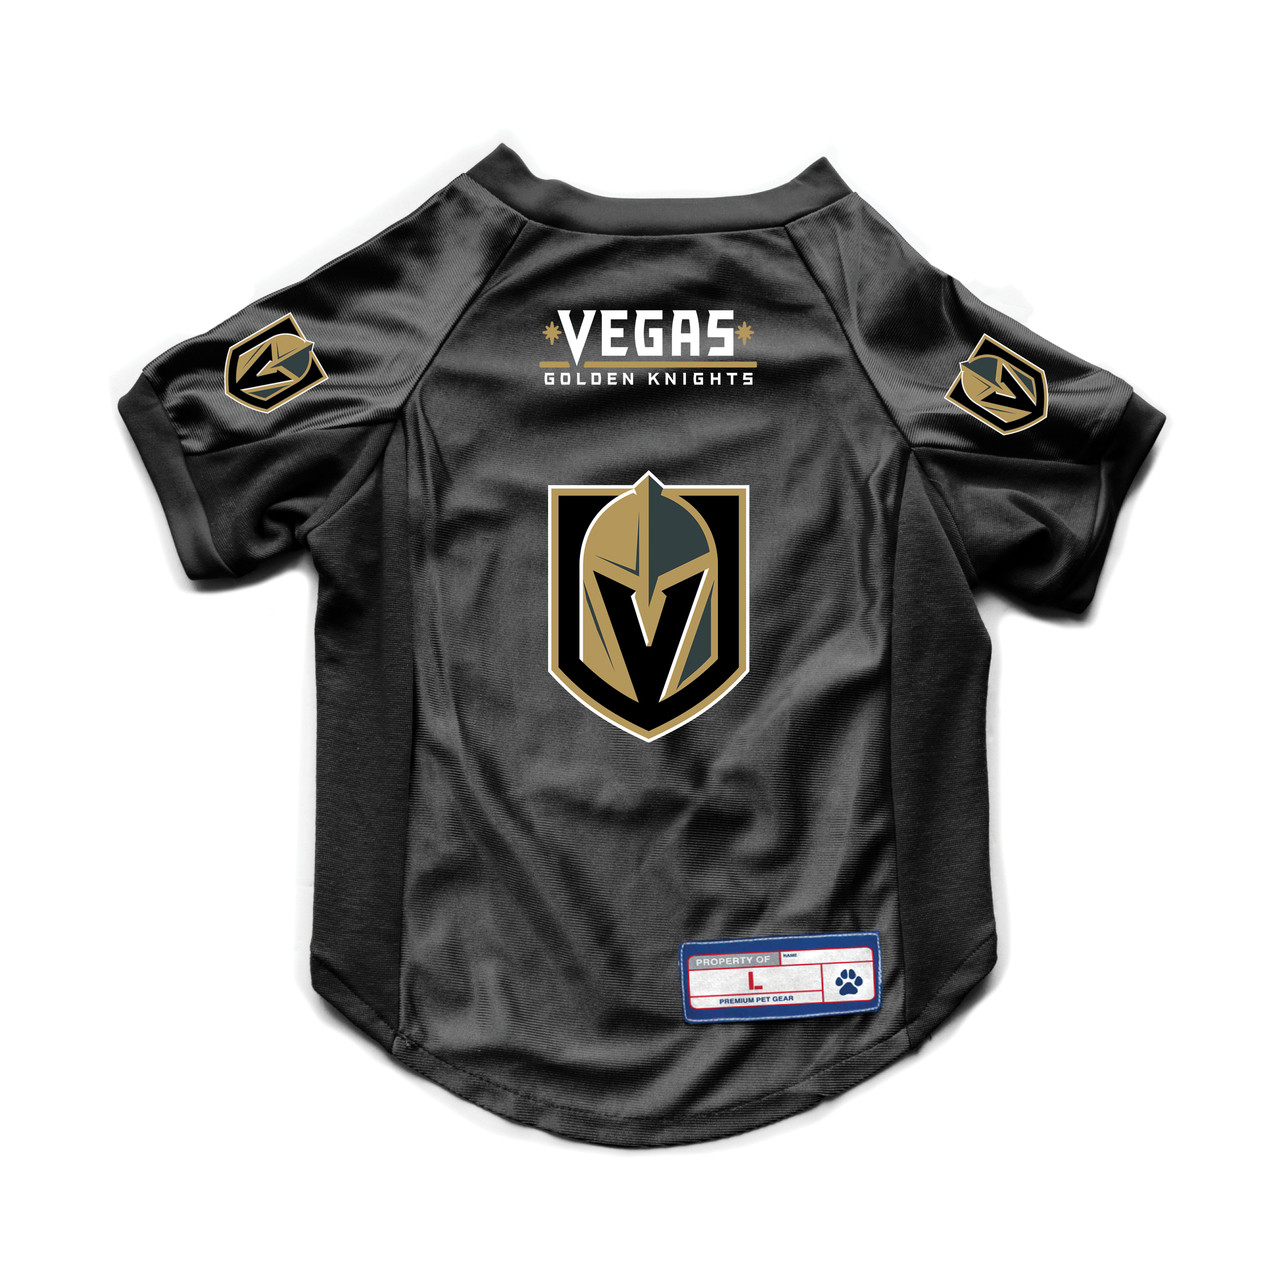 Vegas Golden Knights Pet Jersey - Large